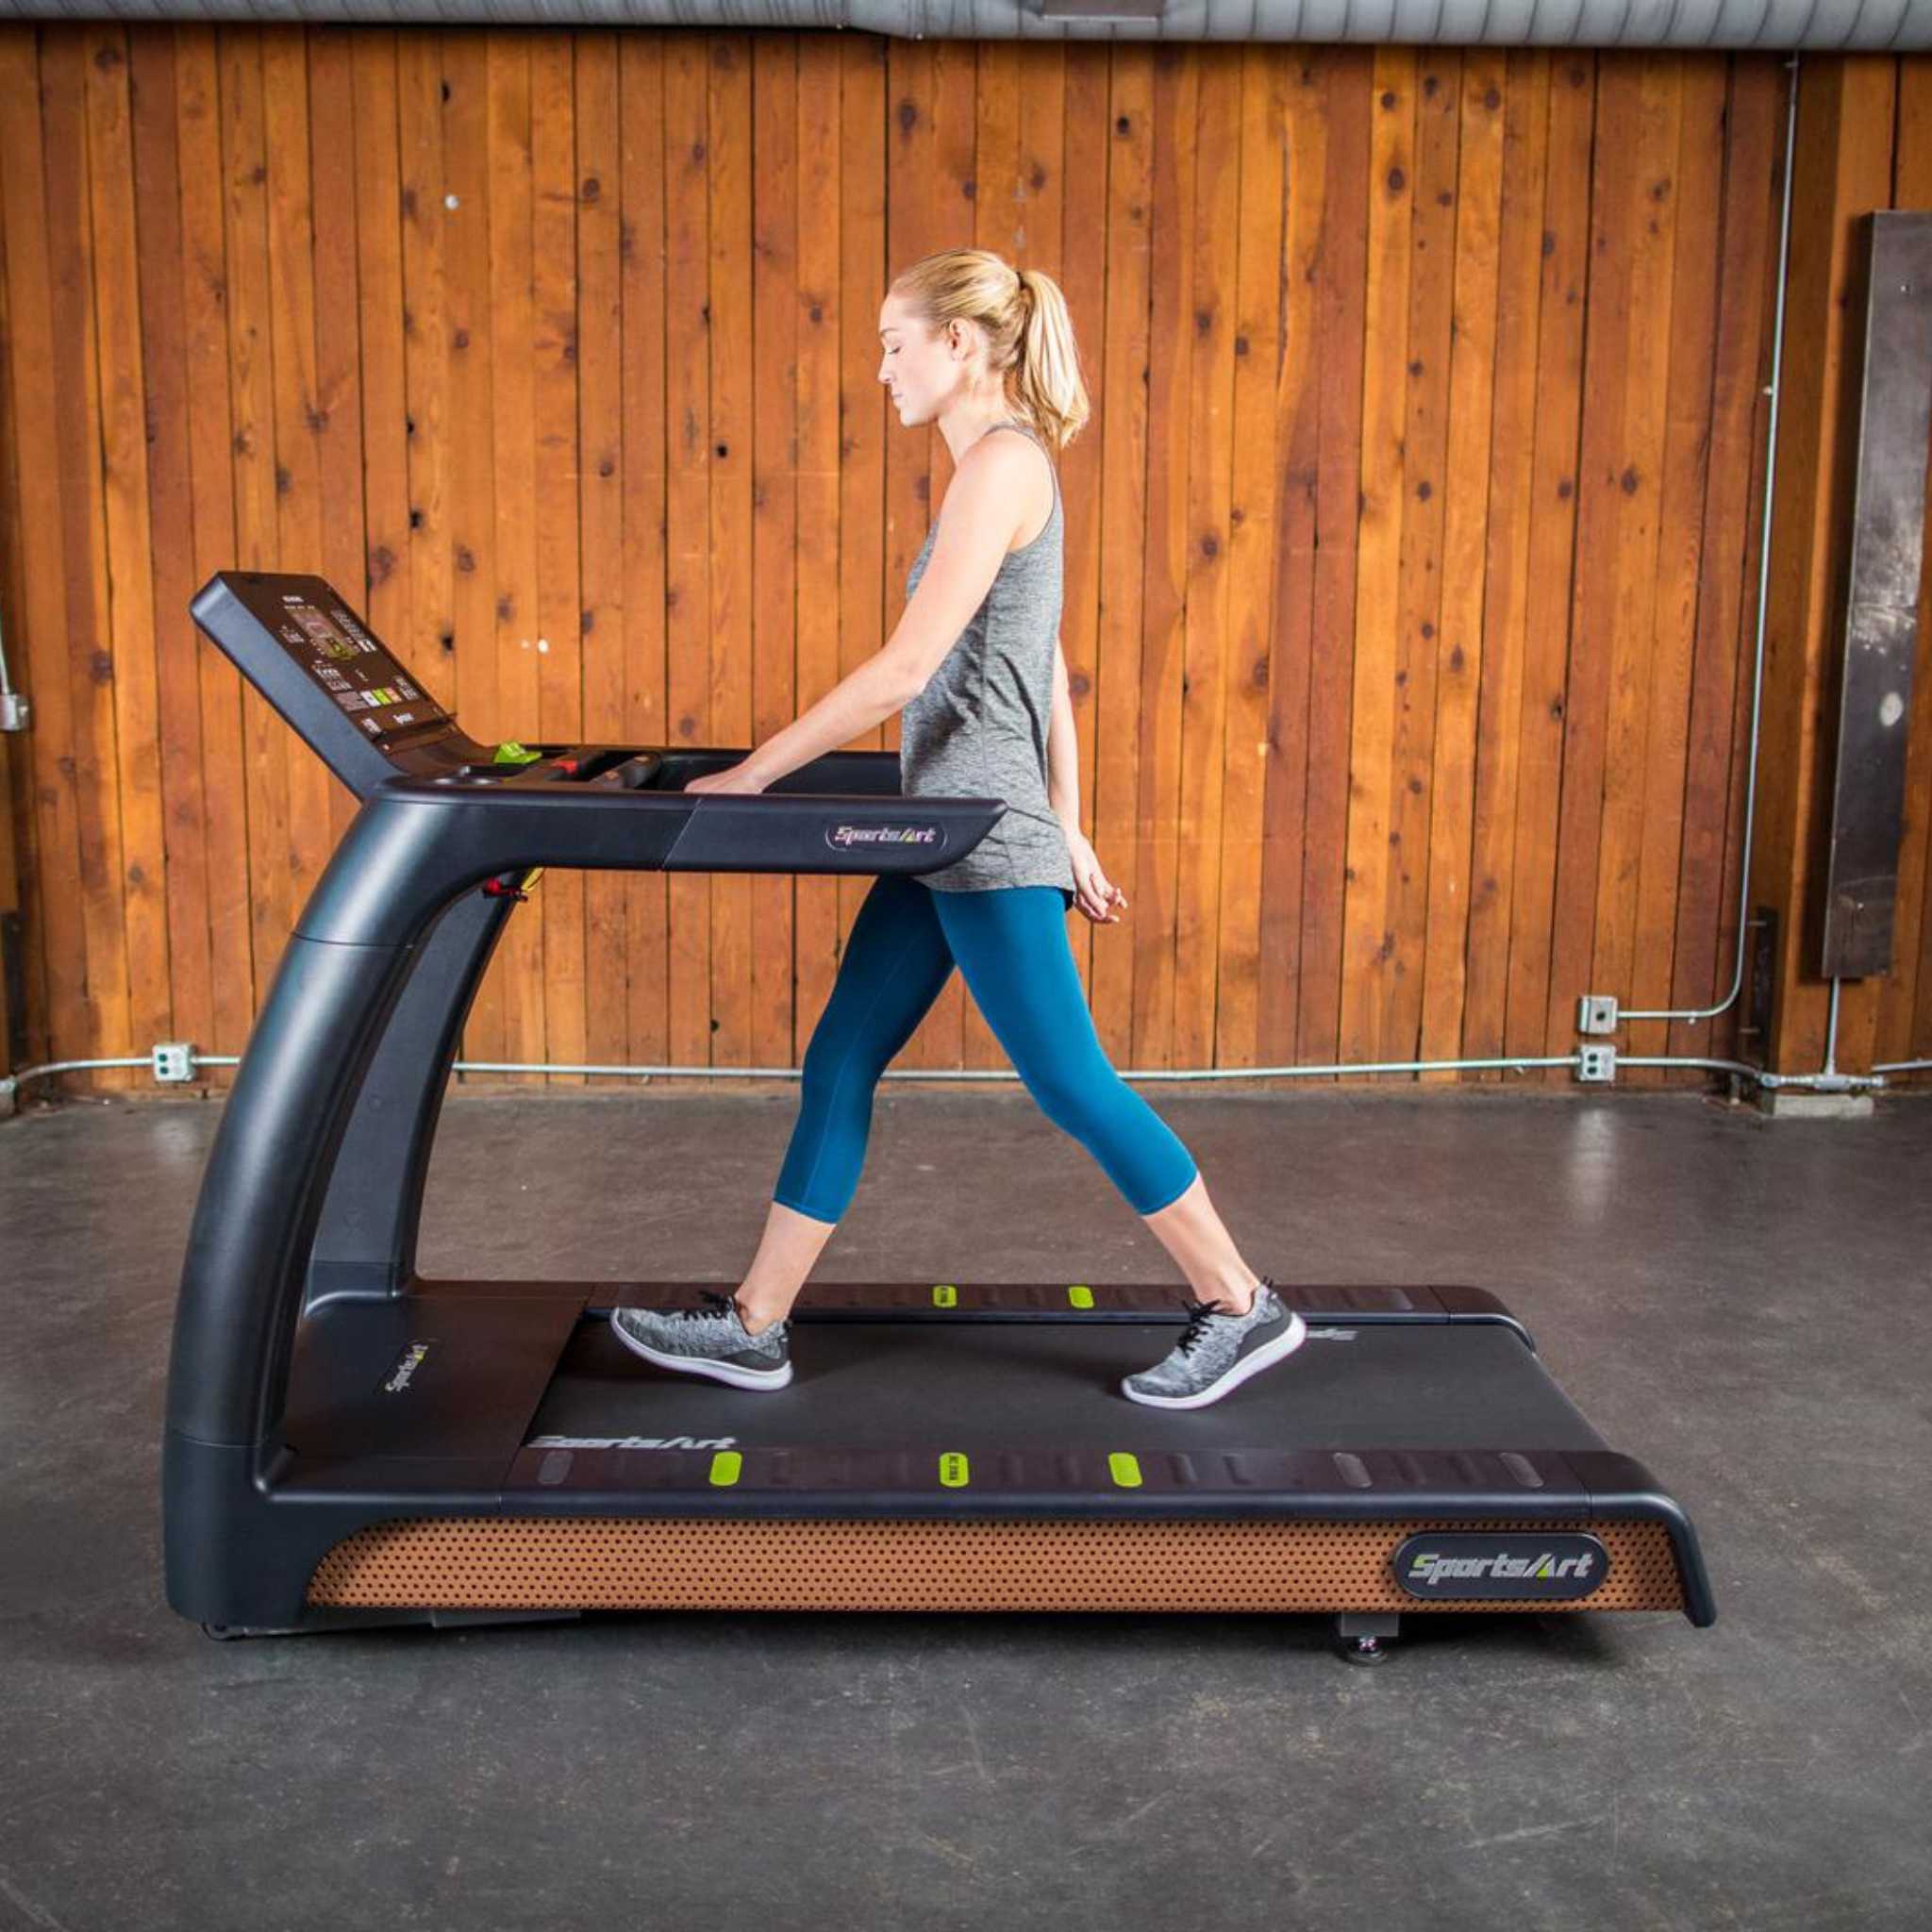 T676 Status Eco-Natural Treadmill female user